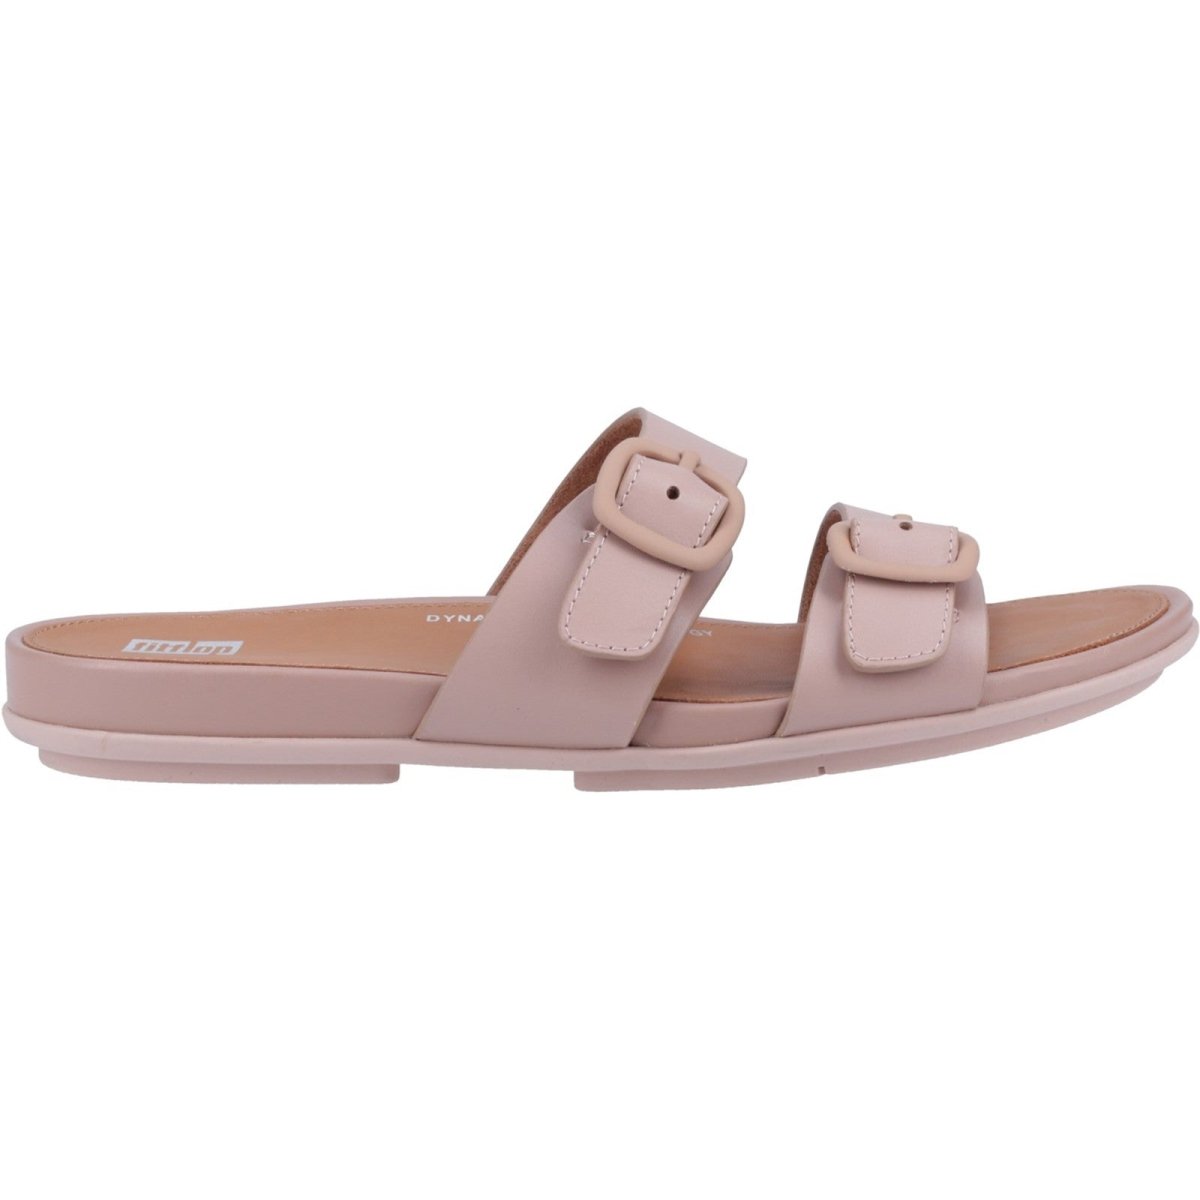 Fitflop Gracie Ladies Adjustable Summer Sliders - Shoe Store Direct